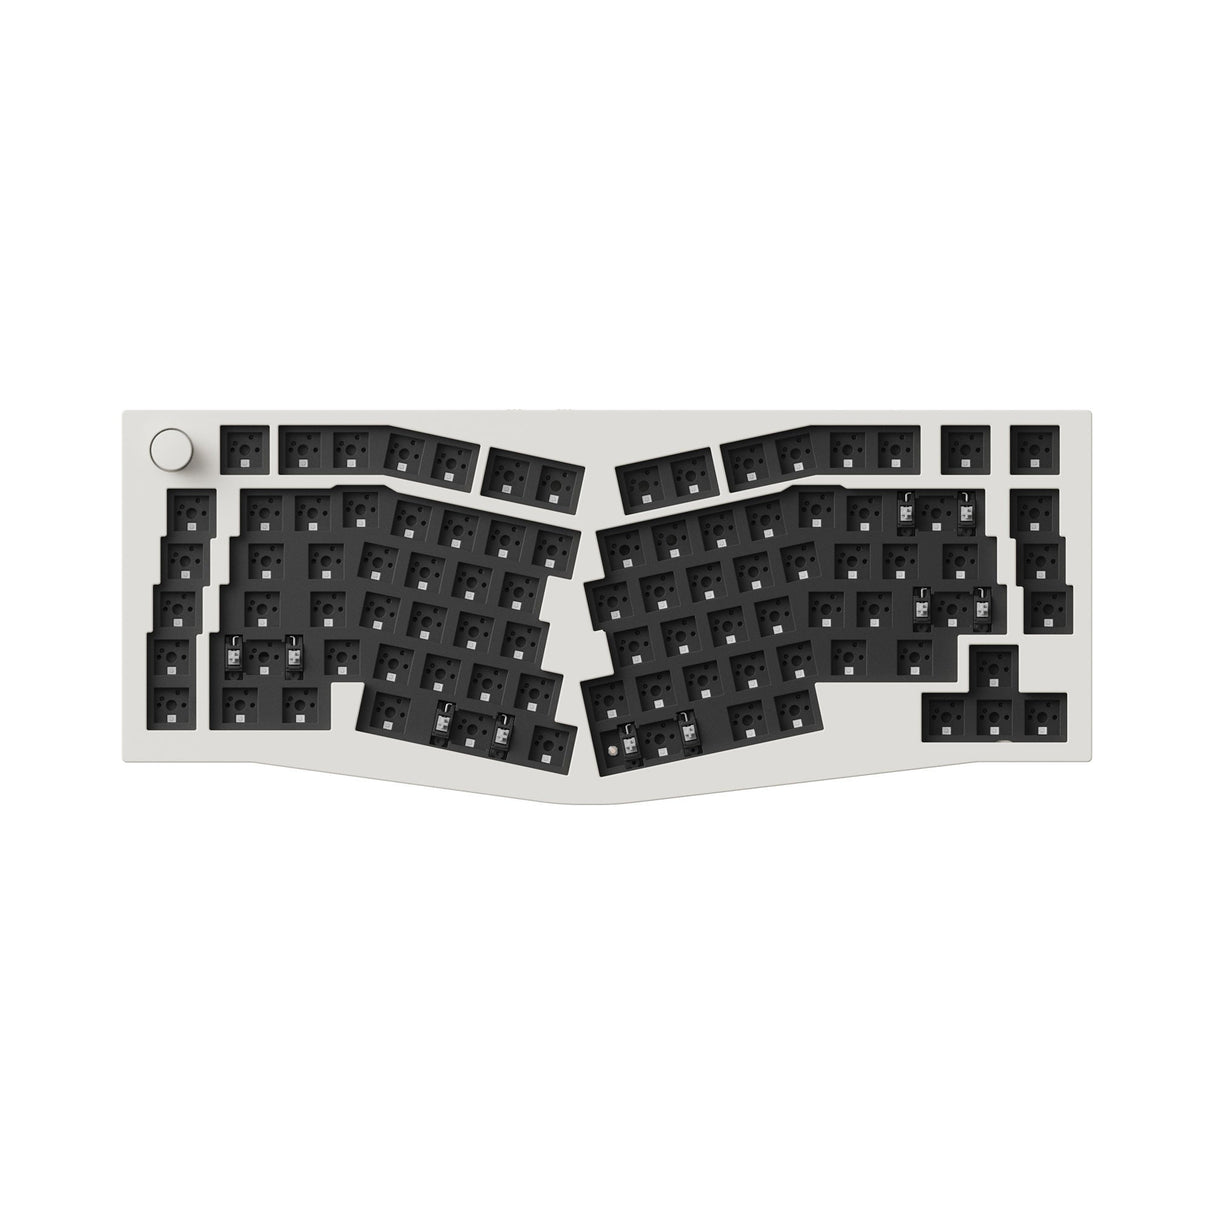 Keychron Q10 Max QMK/VIA Wireless Custom Mechanical Keyboard 75% Alice Layout Aluminum White for Mac Windows Linux Barebone Knob